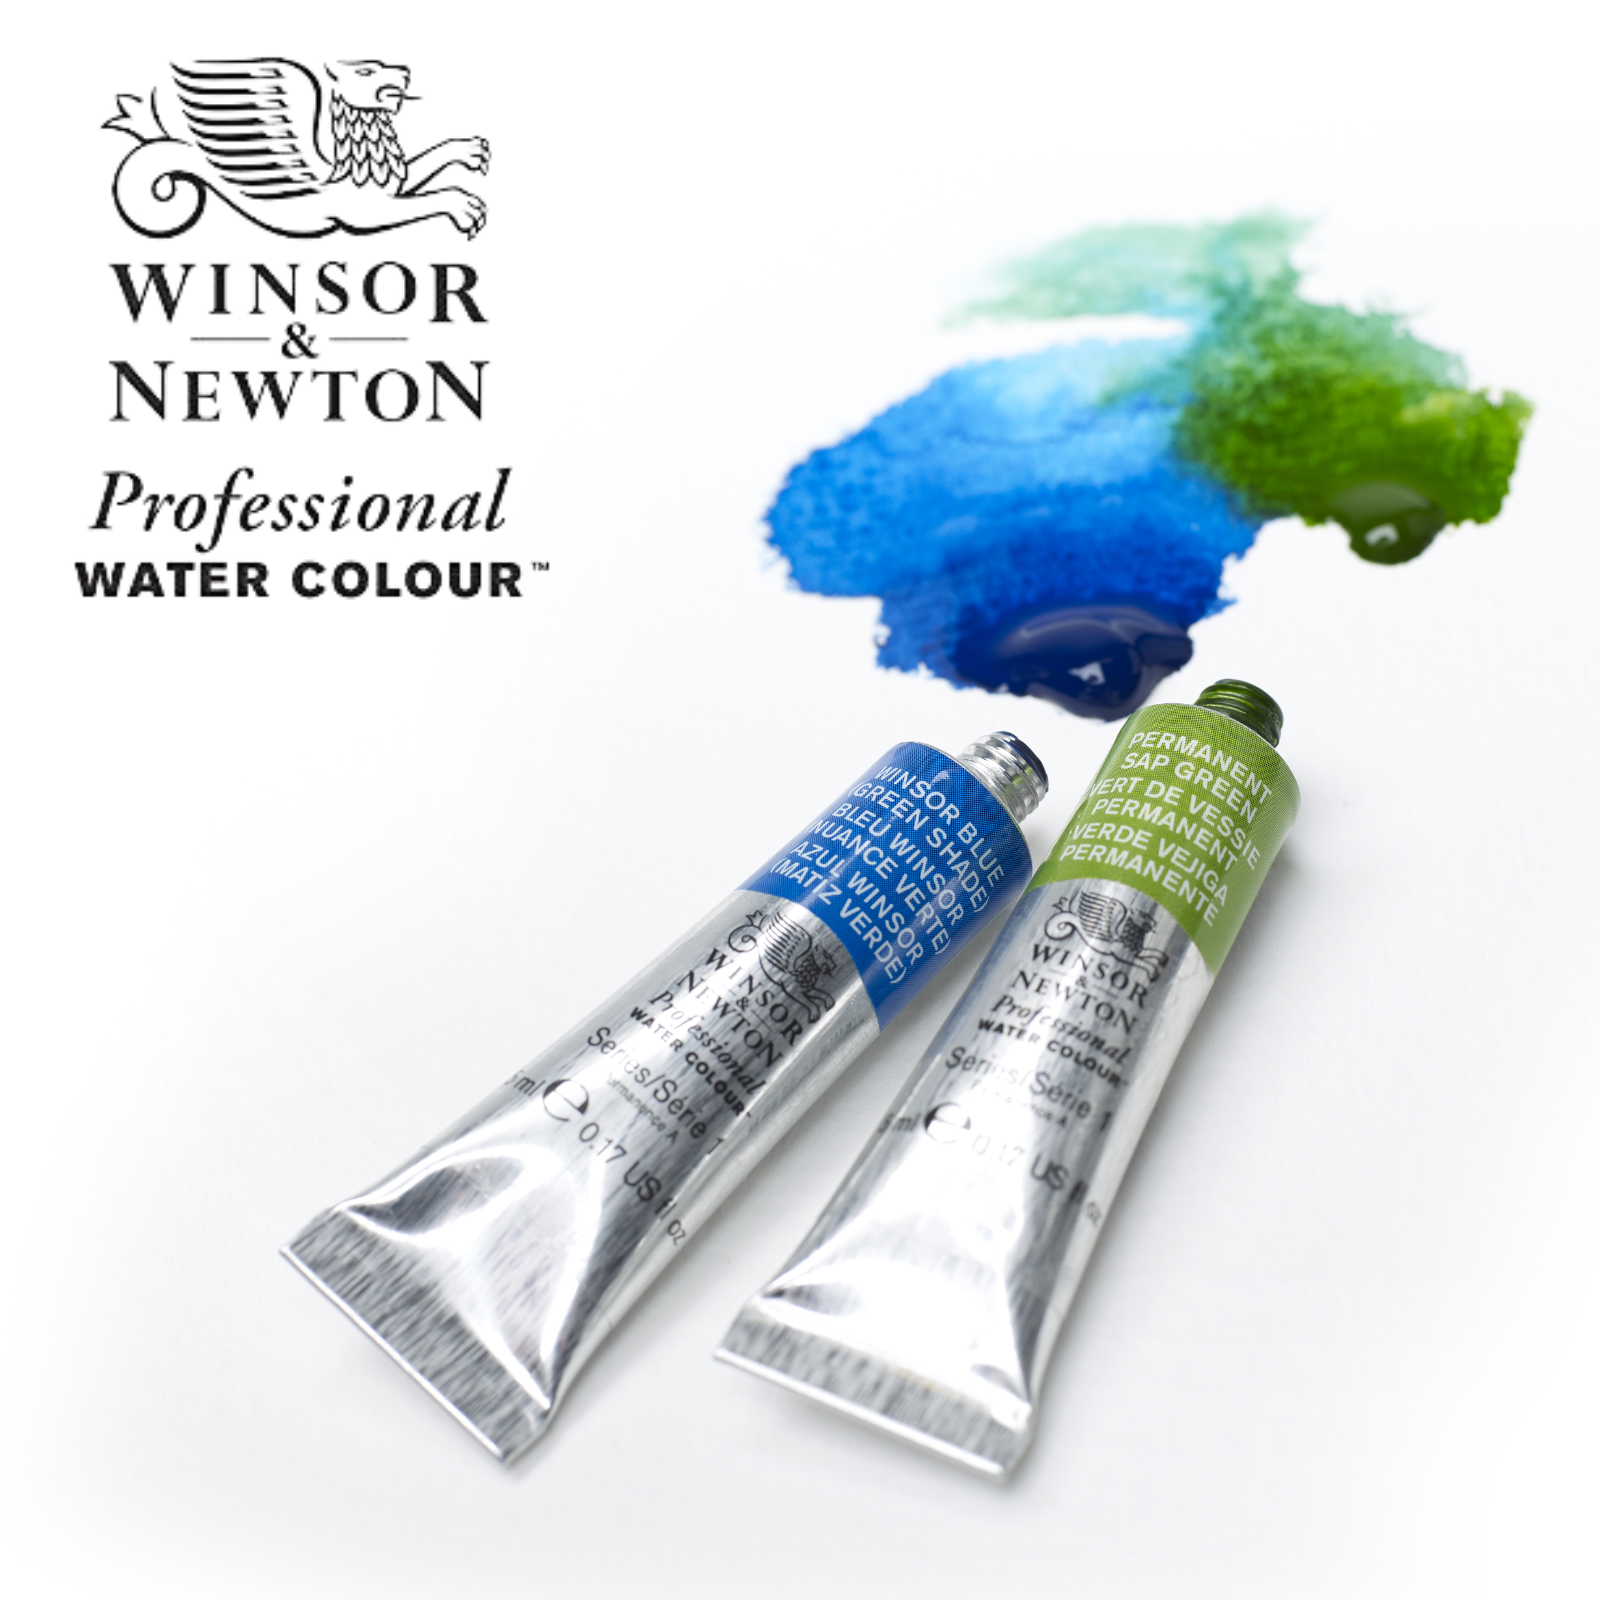 Winsor & Newton Professional Watercolor Review & Comparison 